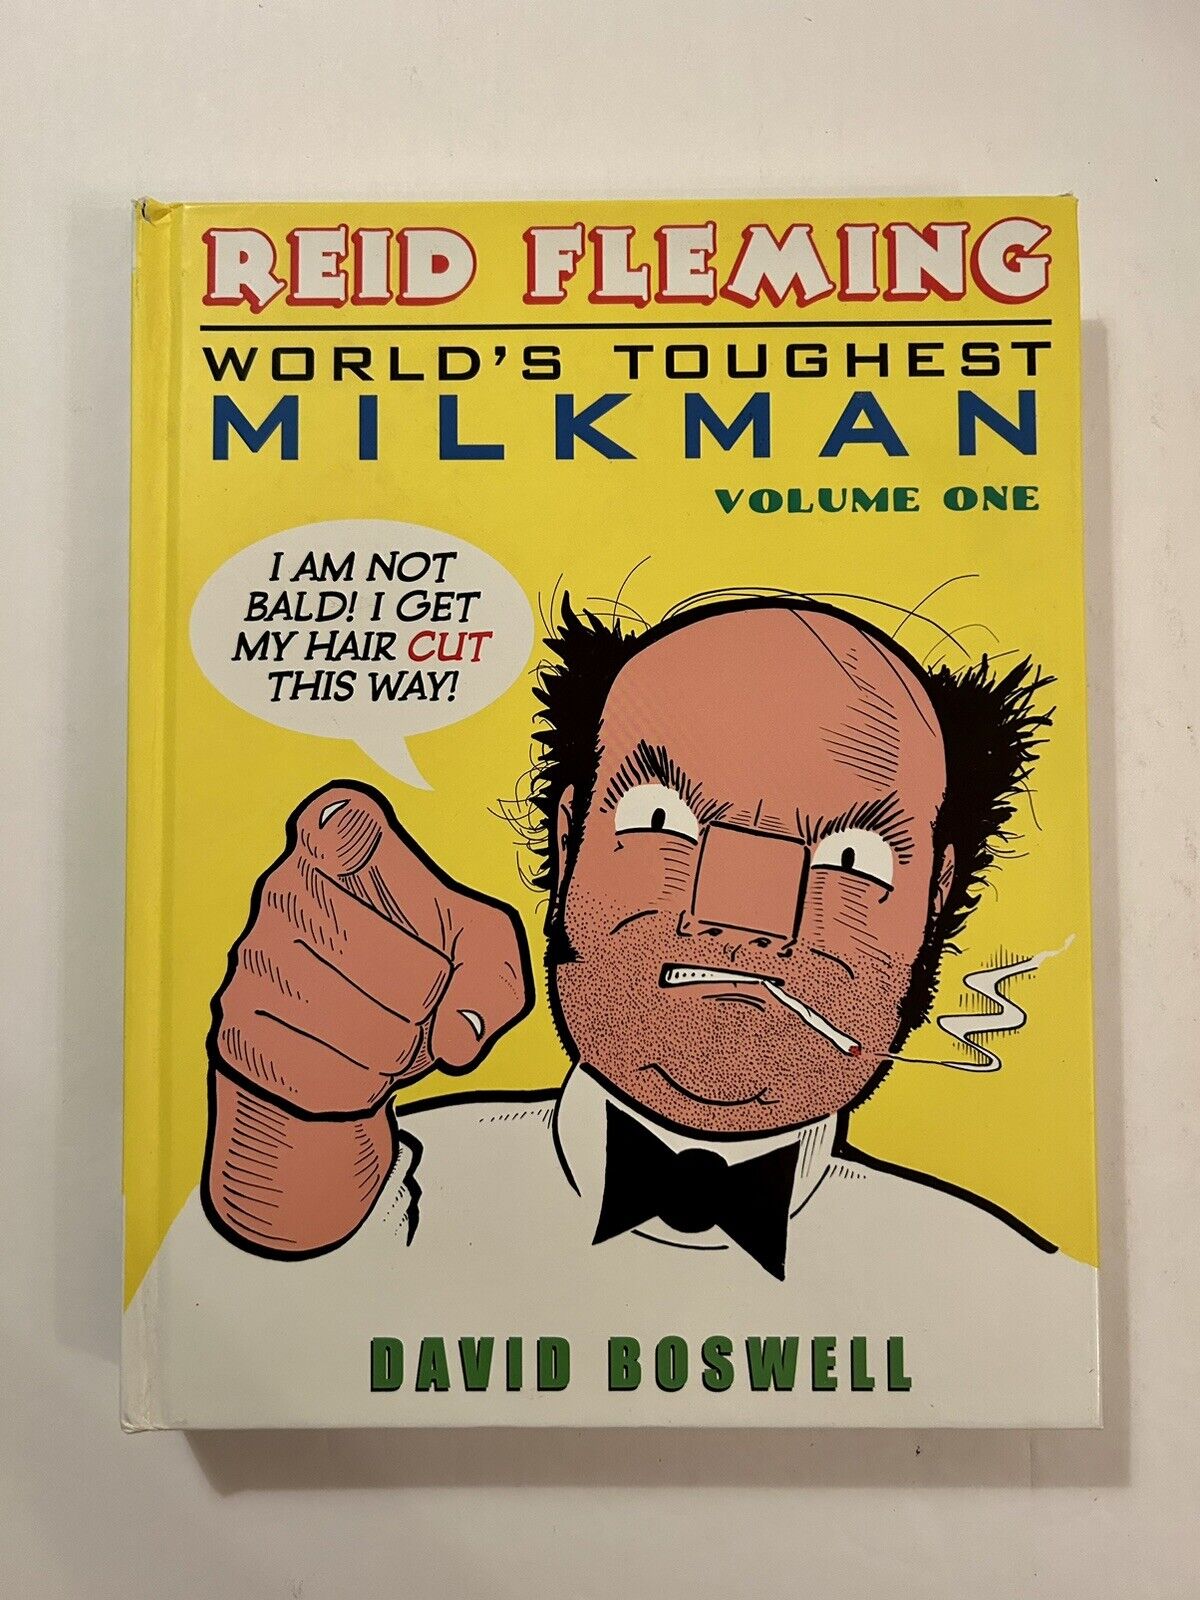 Reid Fleming, World's Toughest Milkman: Vol 1 by Boswell. IDW Publishing, 2011